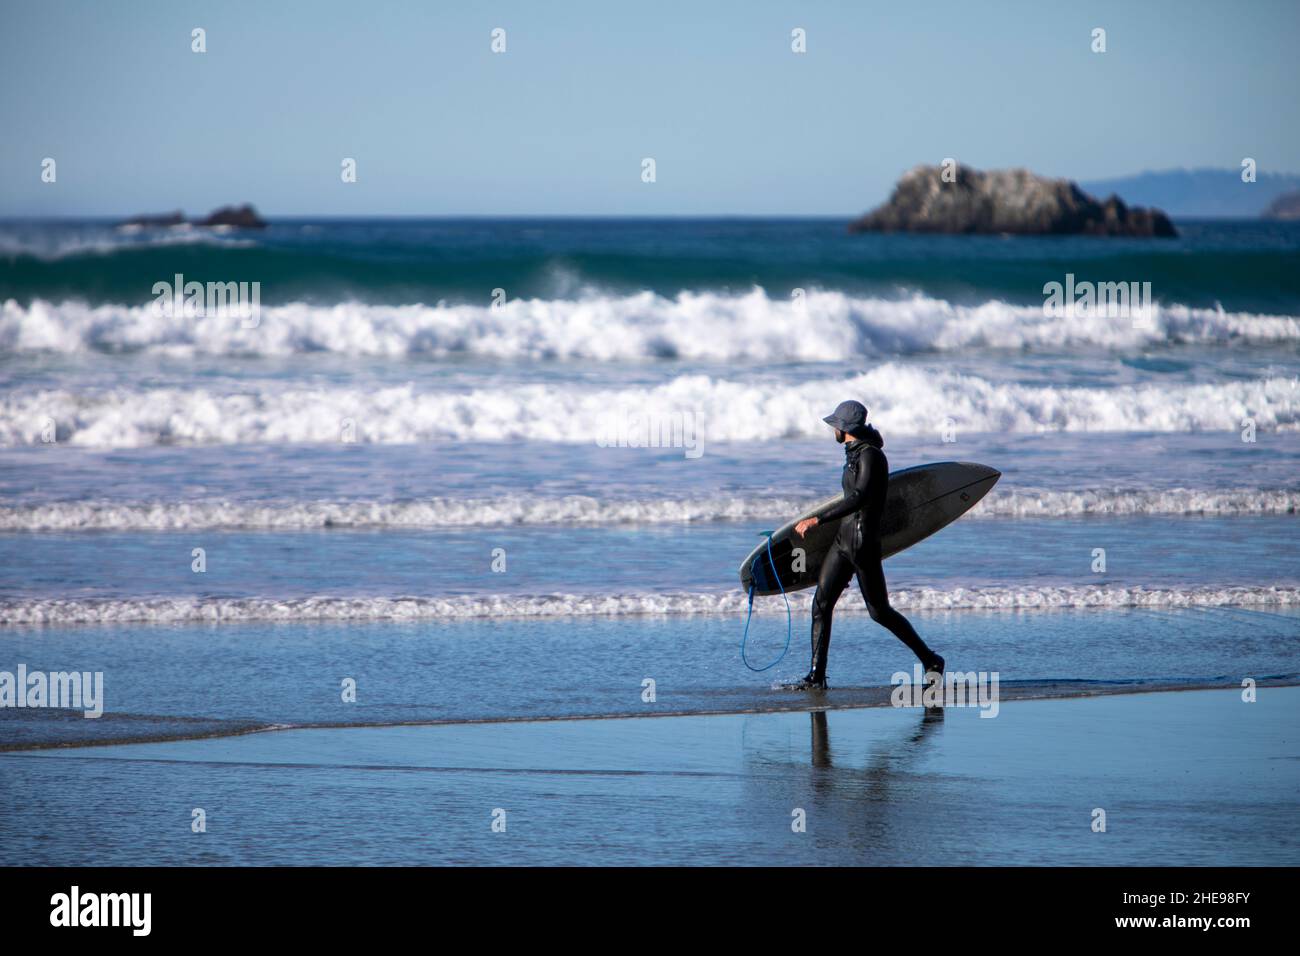 Surfer at Sand Dollar beach, southern Big Sur coast, Highway 1, California Stock Photo